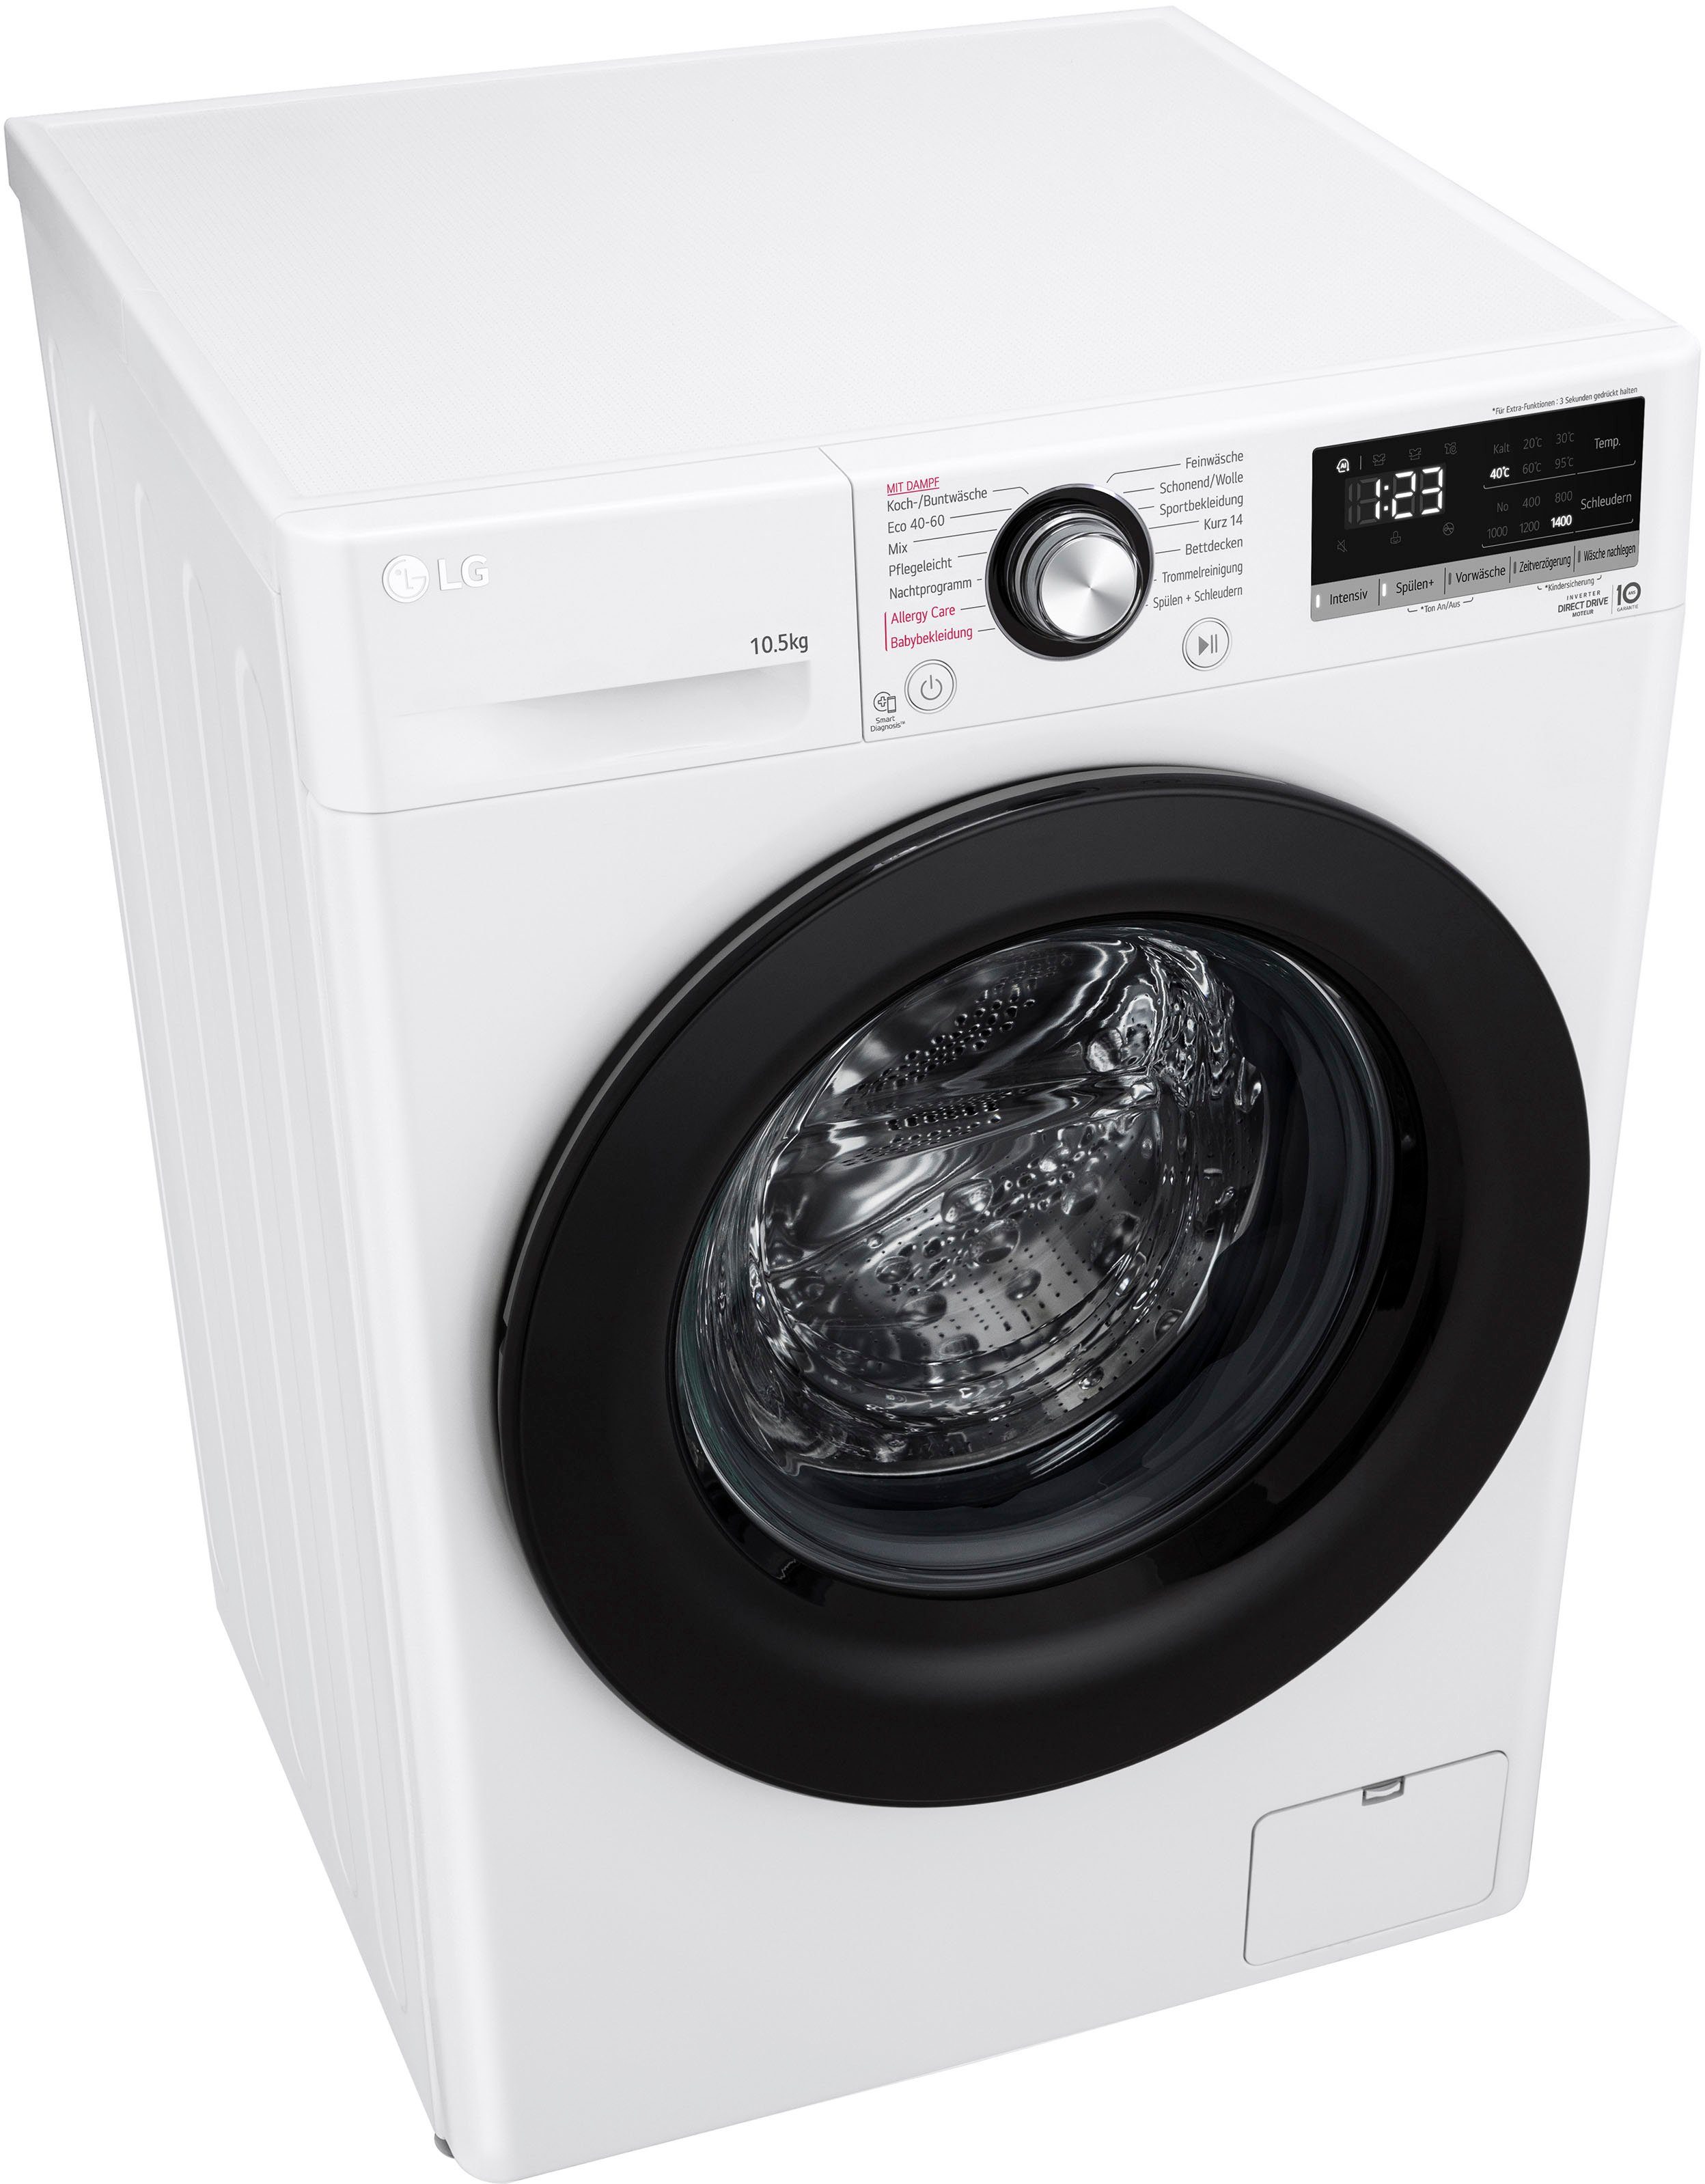 LG Waschmaschine F4WV40X5, 1400 U/min kg, 10,5